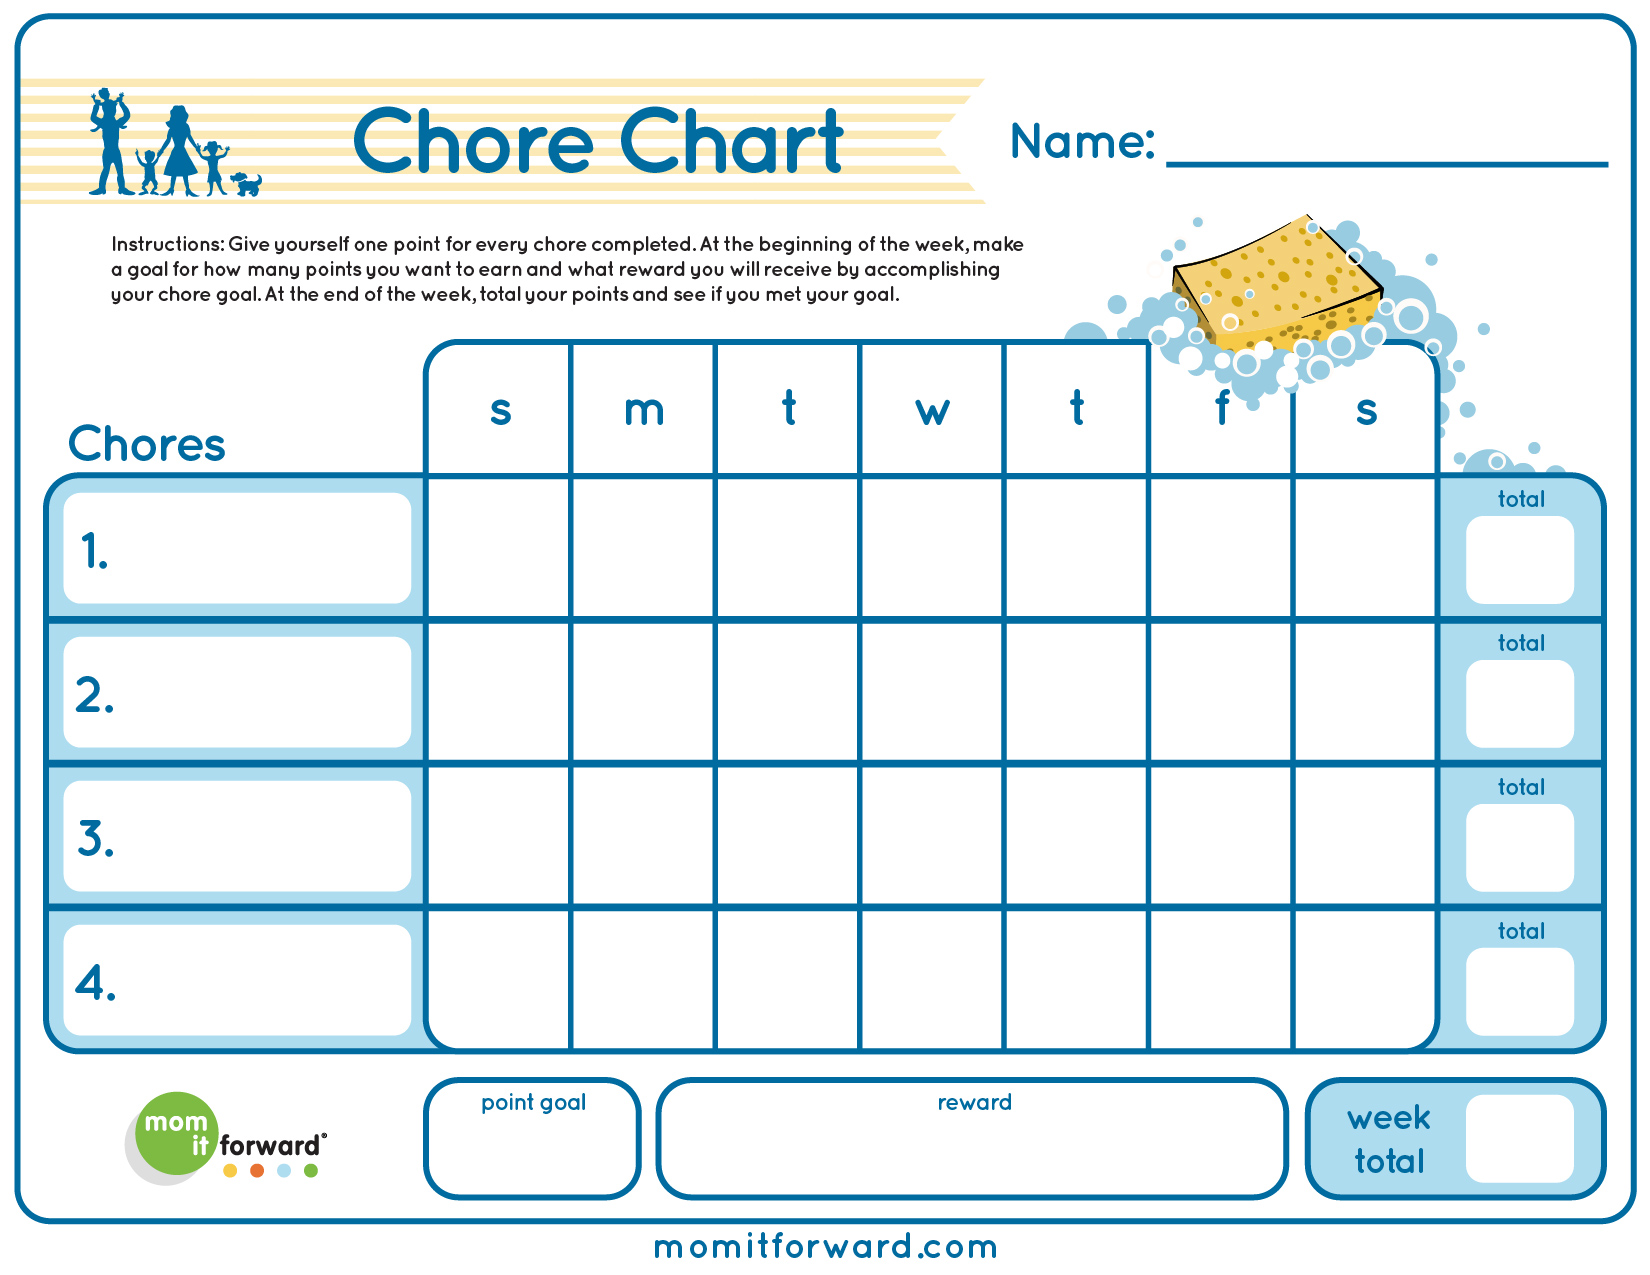 chore-chart-printable-mom-it-forwardmom-it-forward